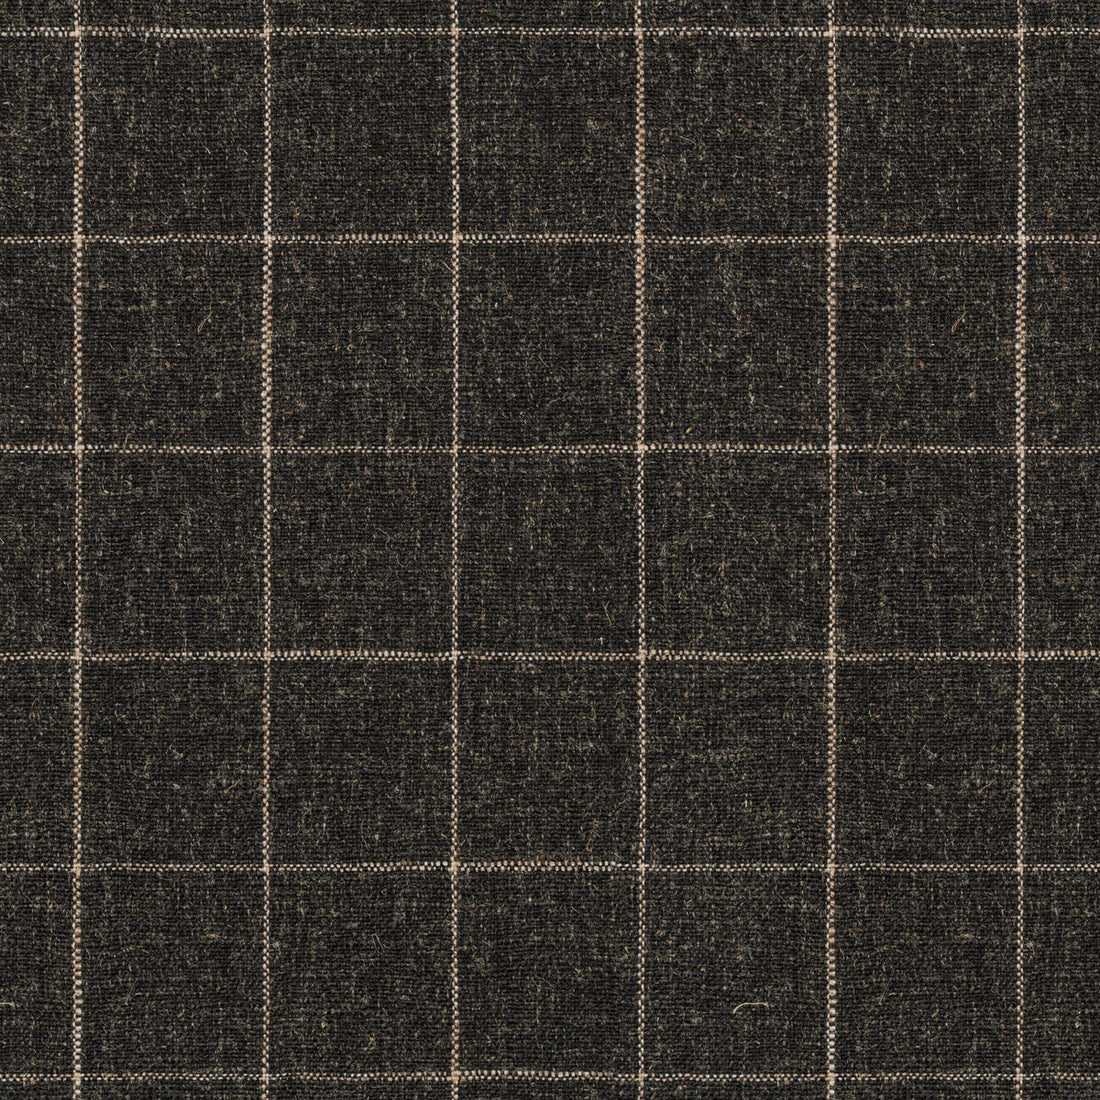 Kf Smt fabric - pattern 35930.81.0 - by Kravet Smart in the Performance Kravetarmor collection